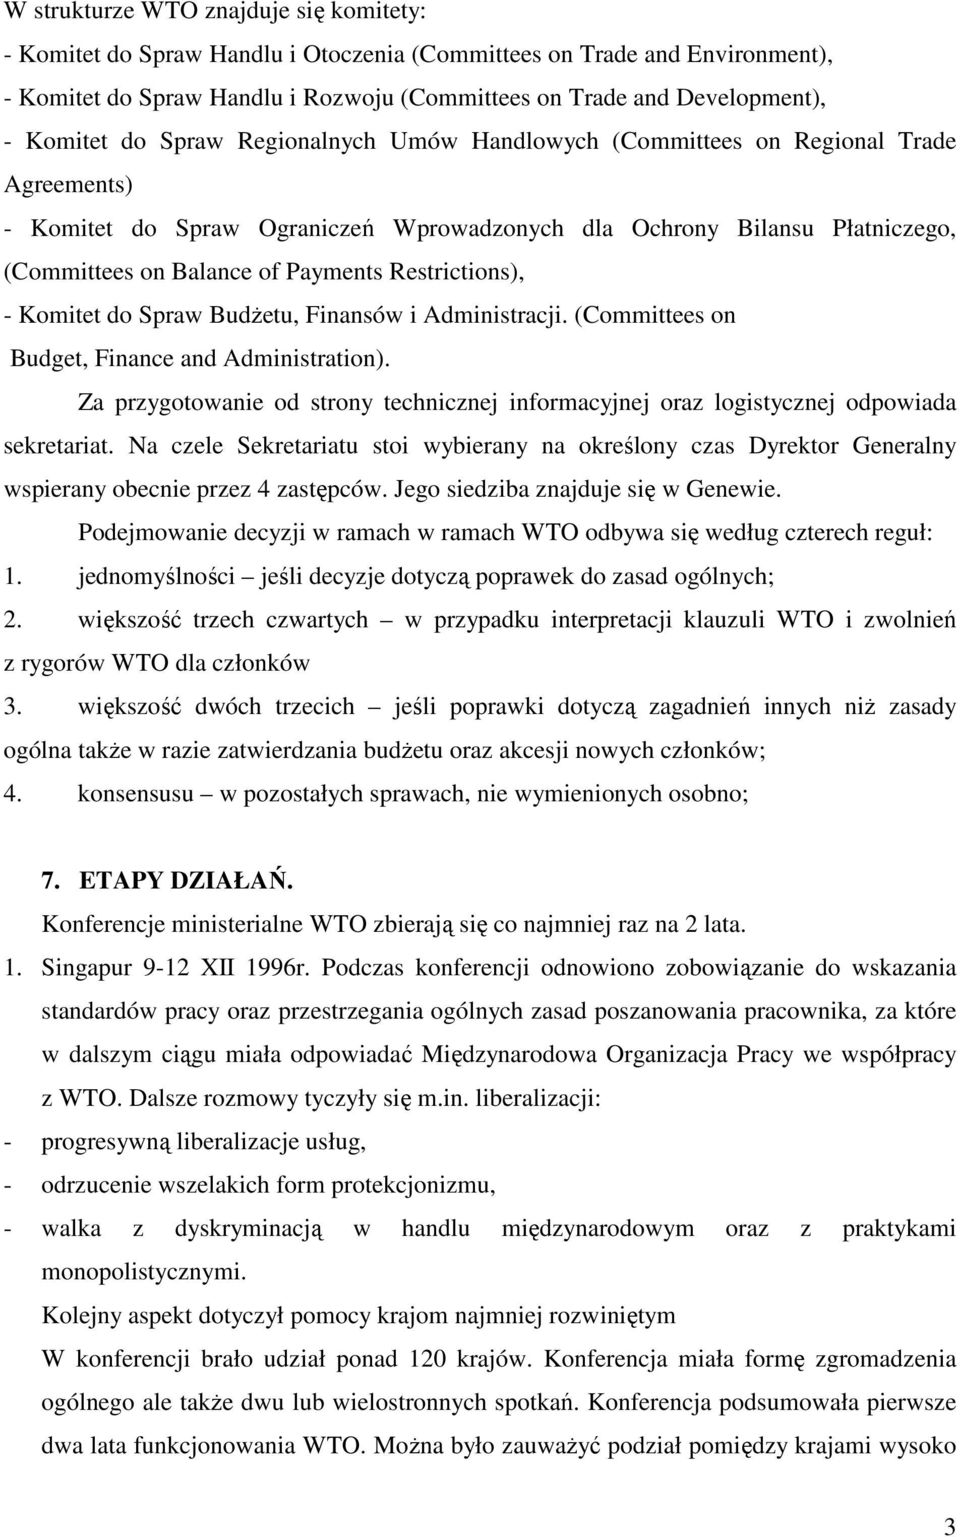 Restrictions), - Komitet do Spraw BudŜetu, Finansów i Administracji. (Committees on Budget, Finance and Administration).